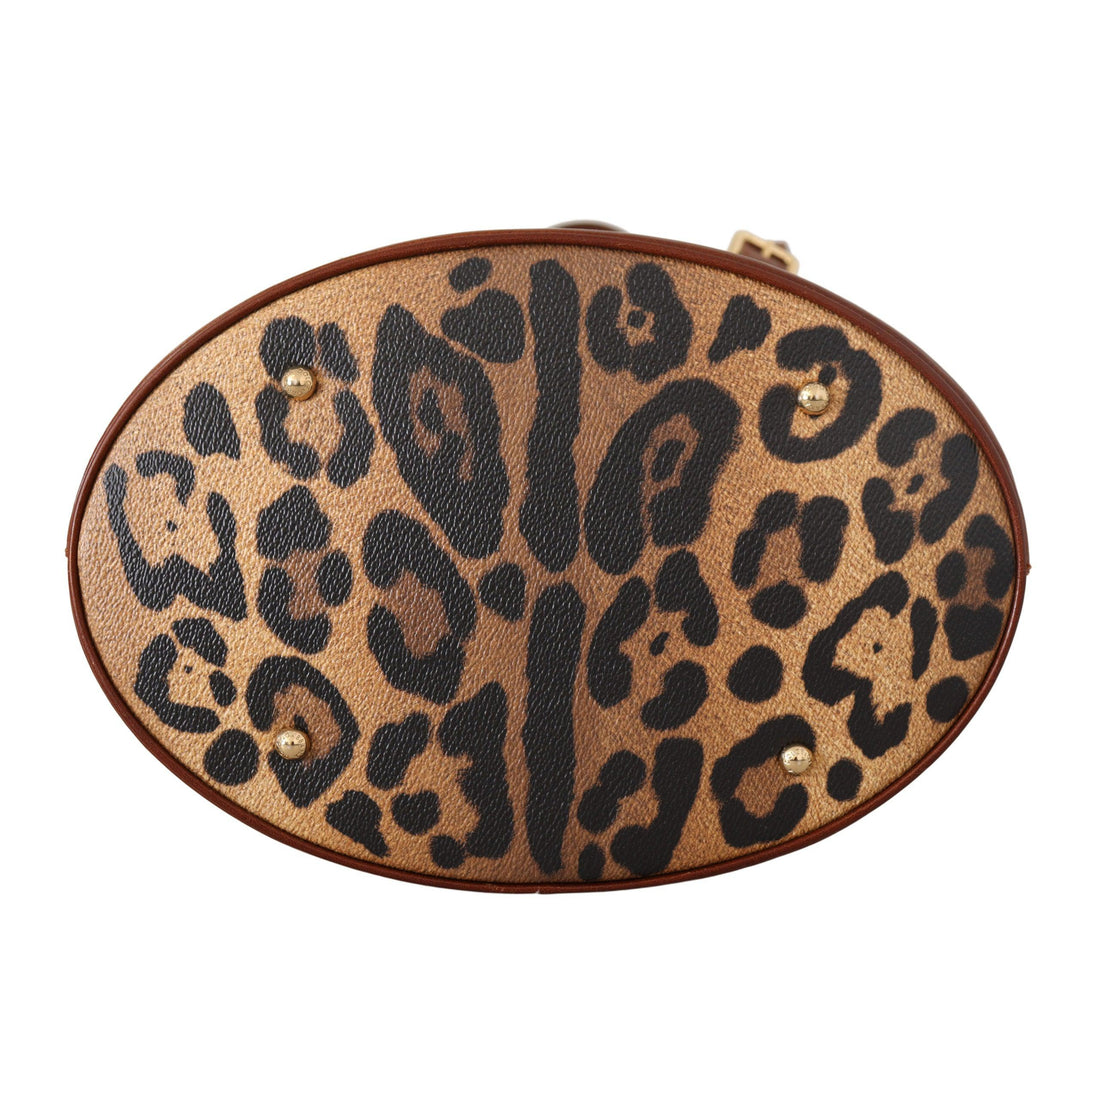 Dolce & Gabbana Brown Leopard Pattern Shopping Tote Hand Bucket Purse